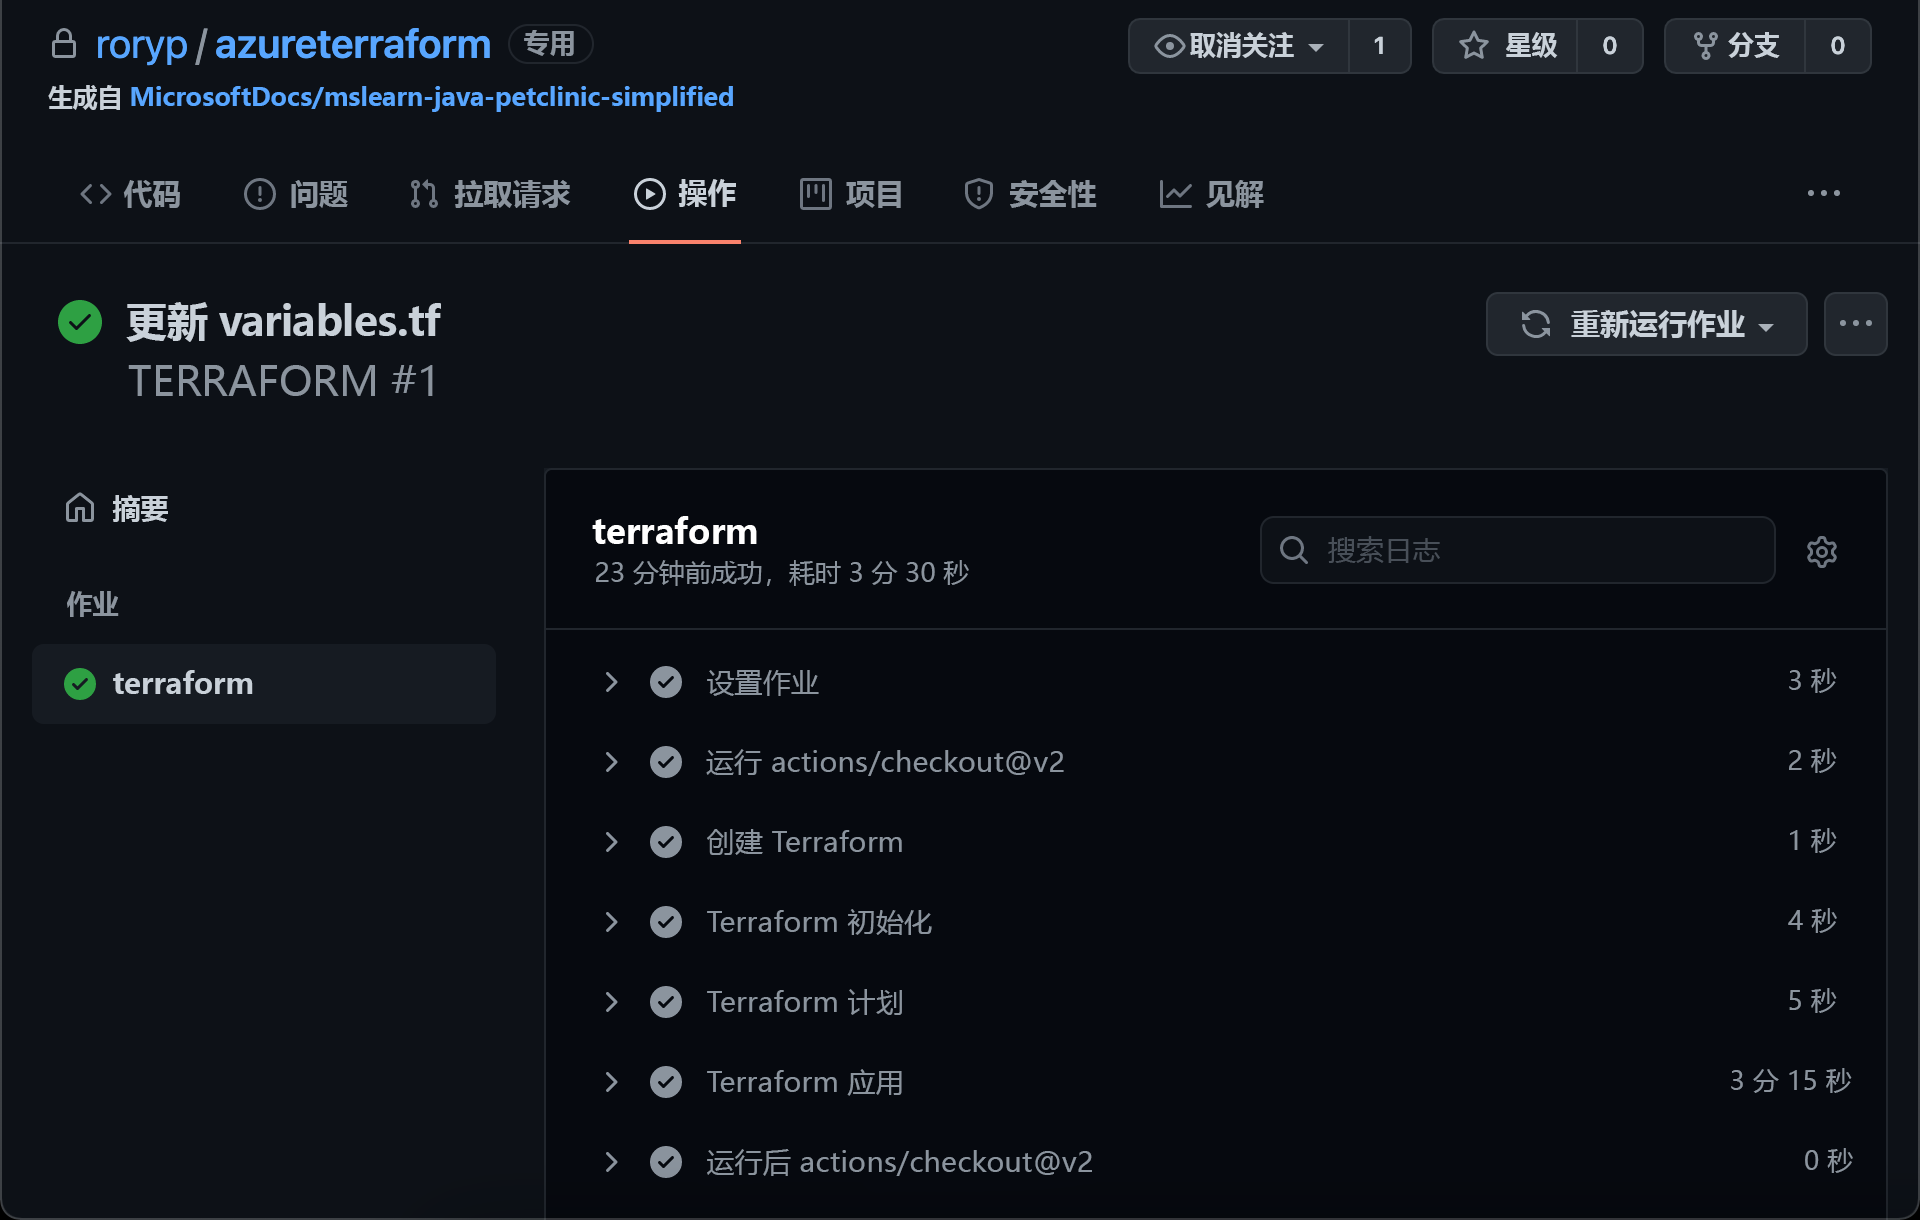 Screenshot displaying the results of the Terraform workflow run.